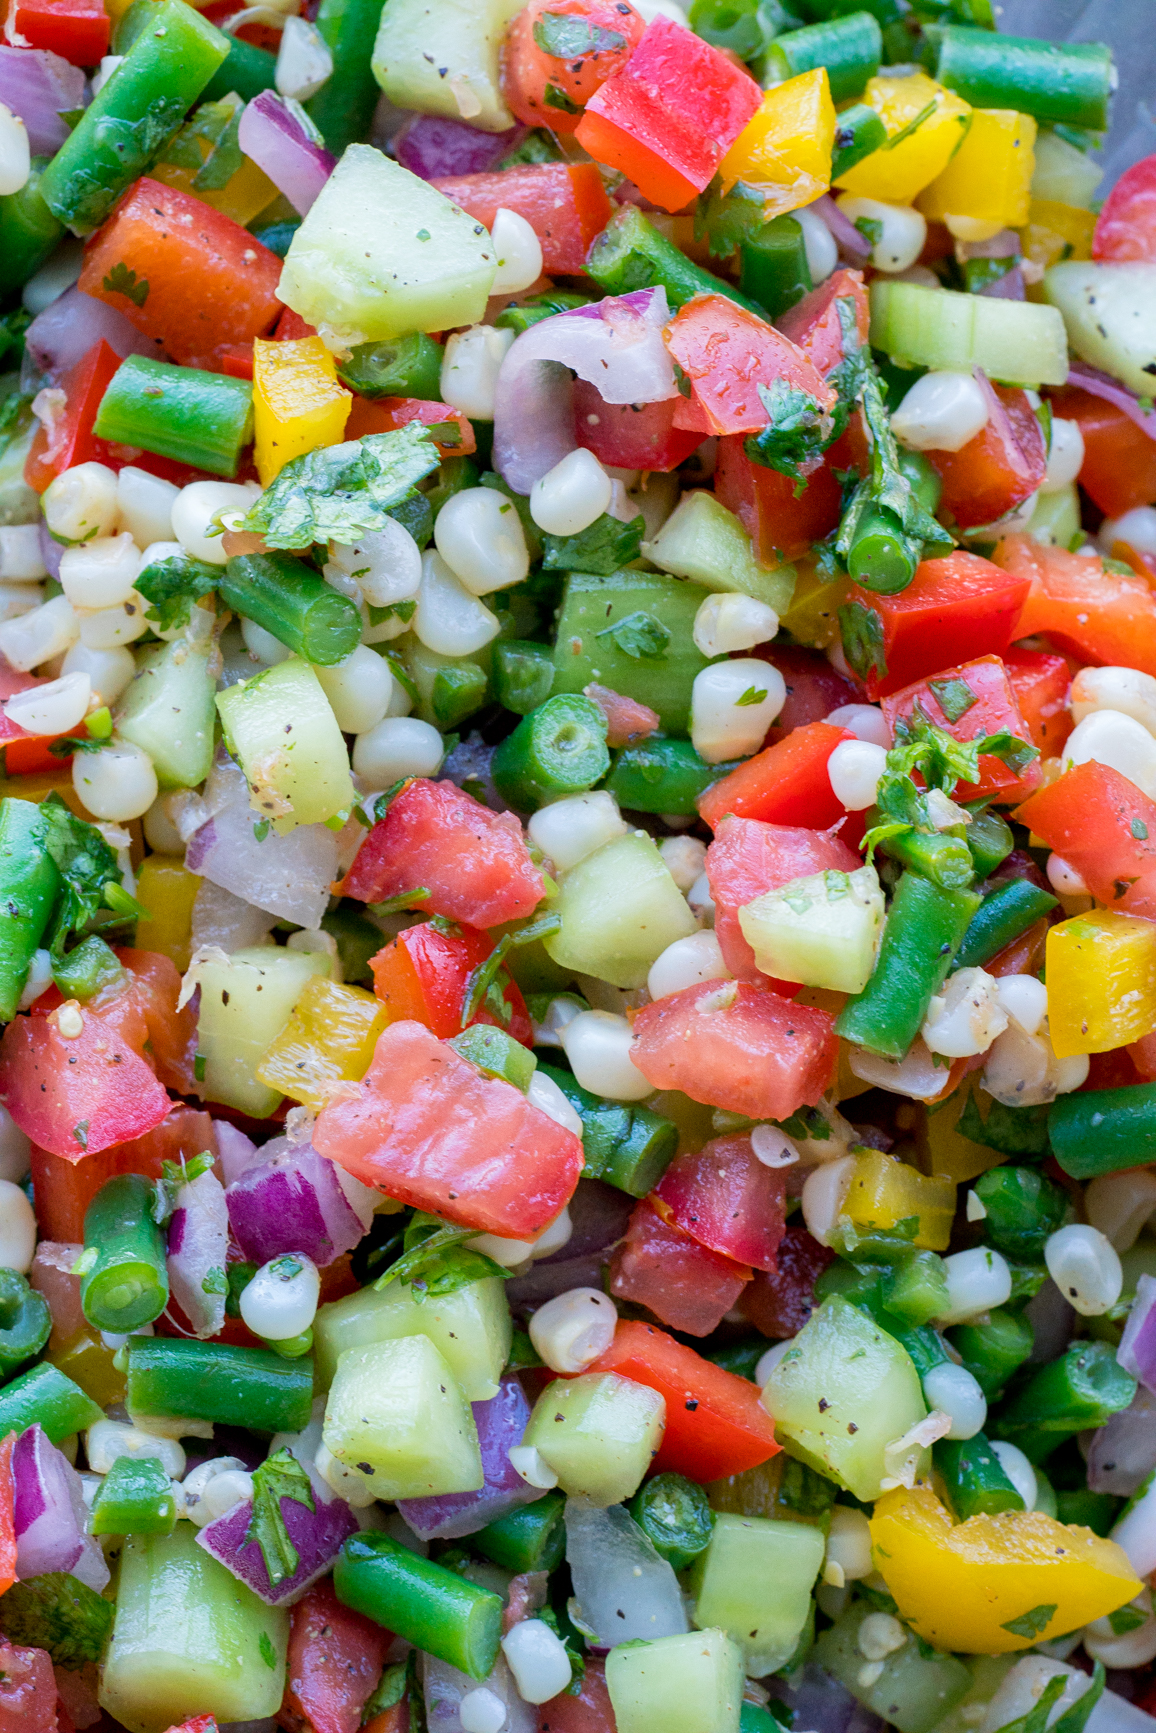 https://cdn.greatlifepublishing.net/wp-content/uploads/sites/2/2019/08/21173418/Martha-Stewarts-Chopped-Vegetable-Salad-4.jpg